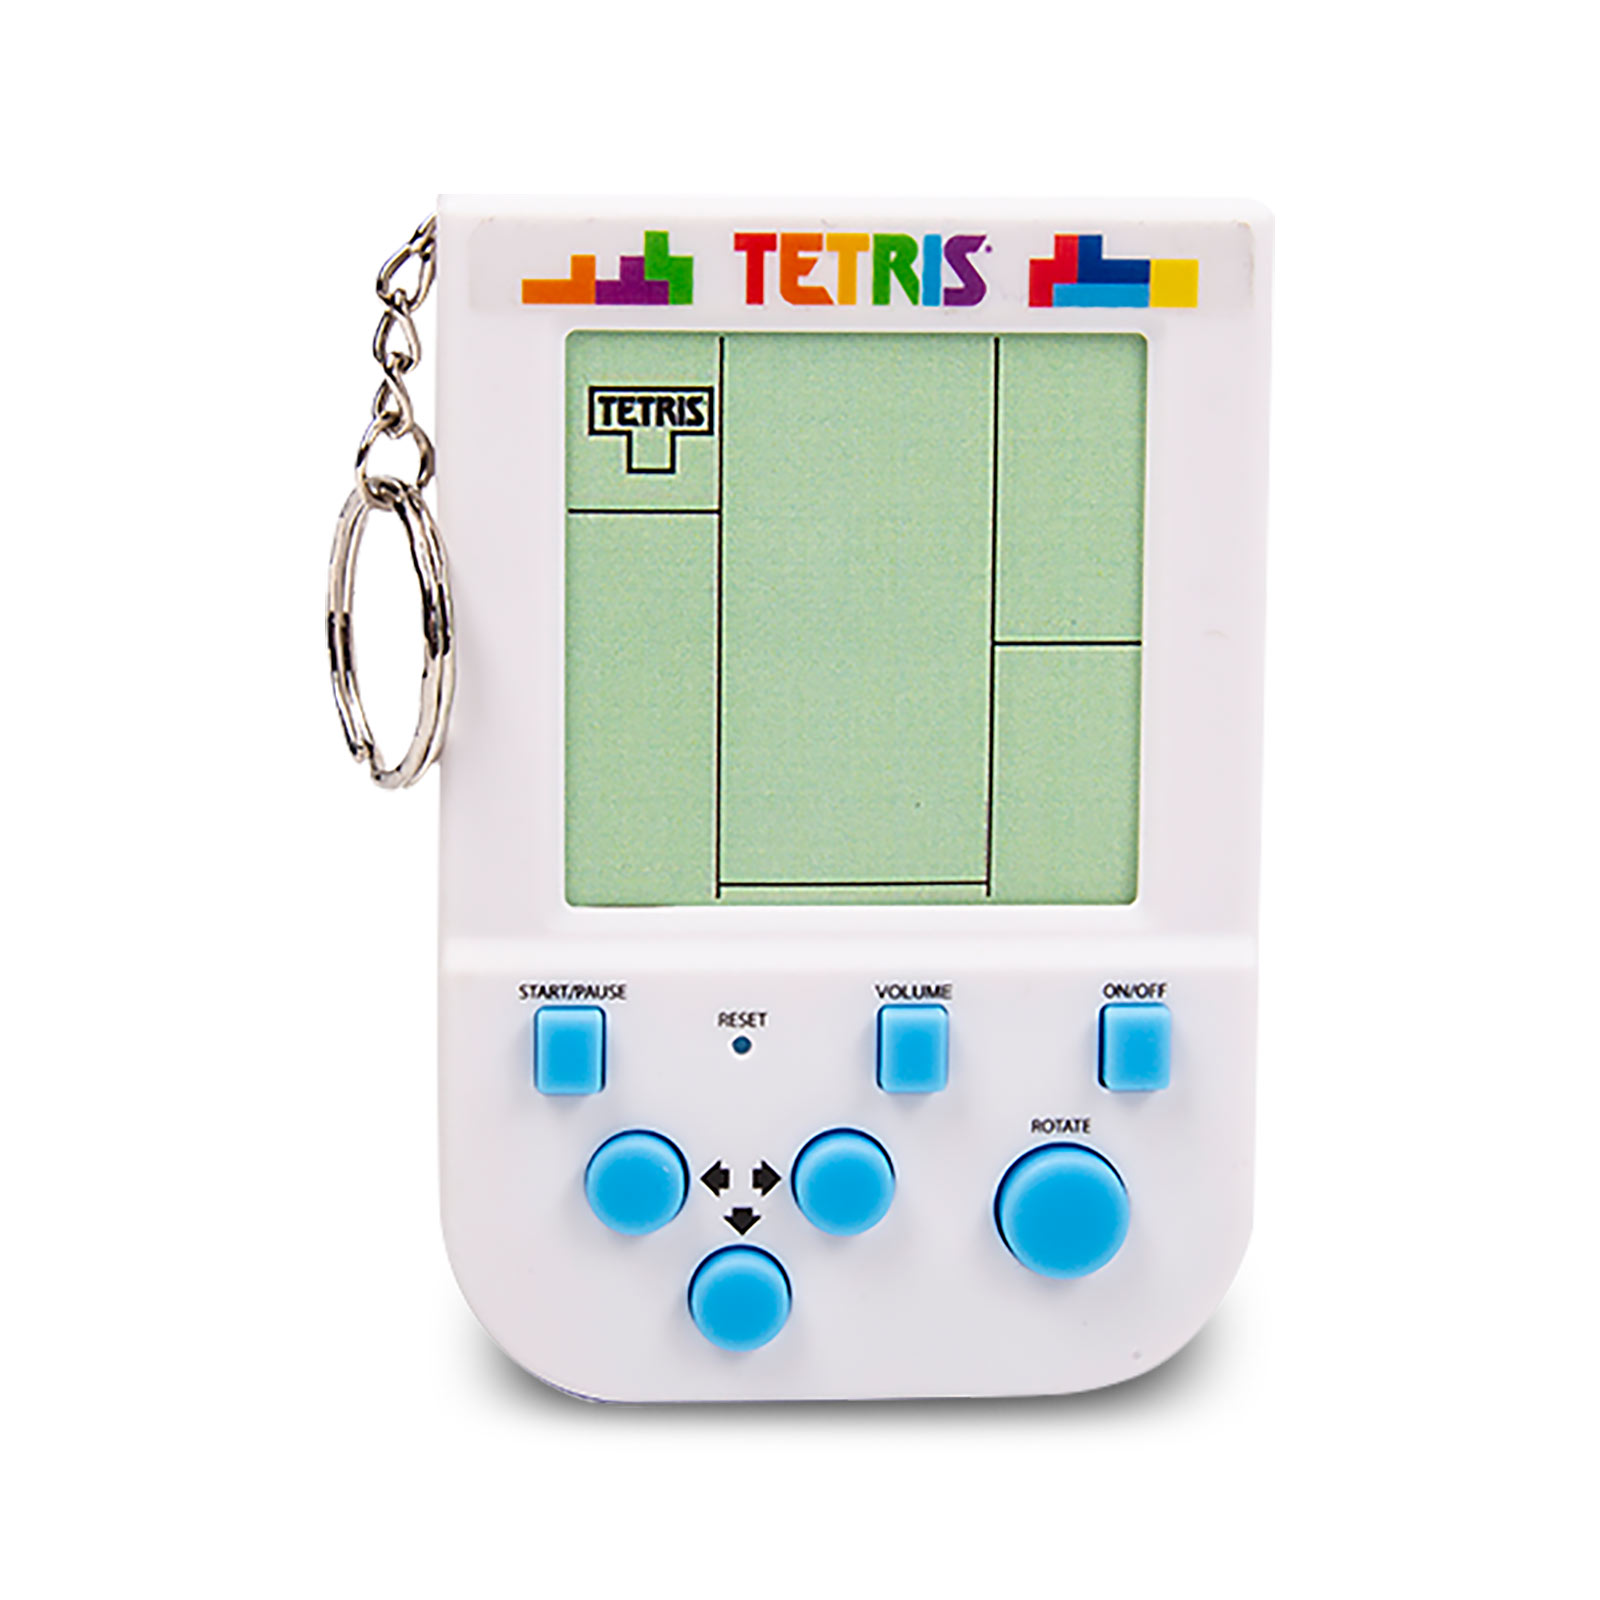 Tetris - Retro Game Mini Console